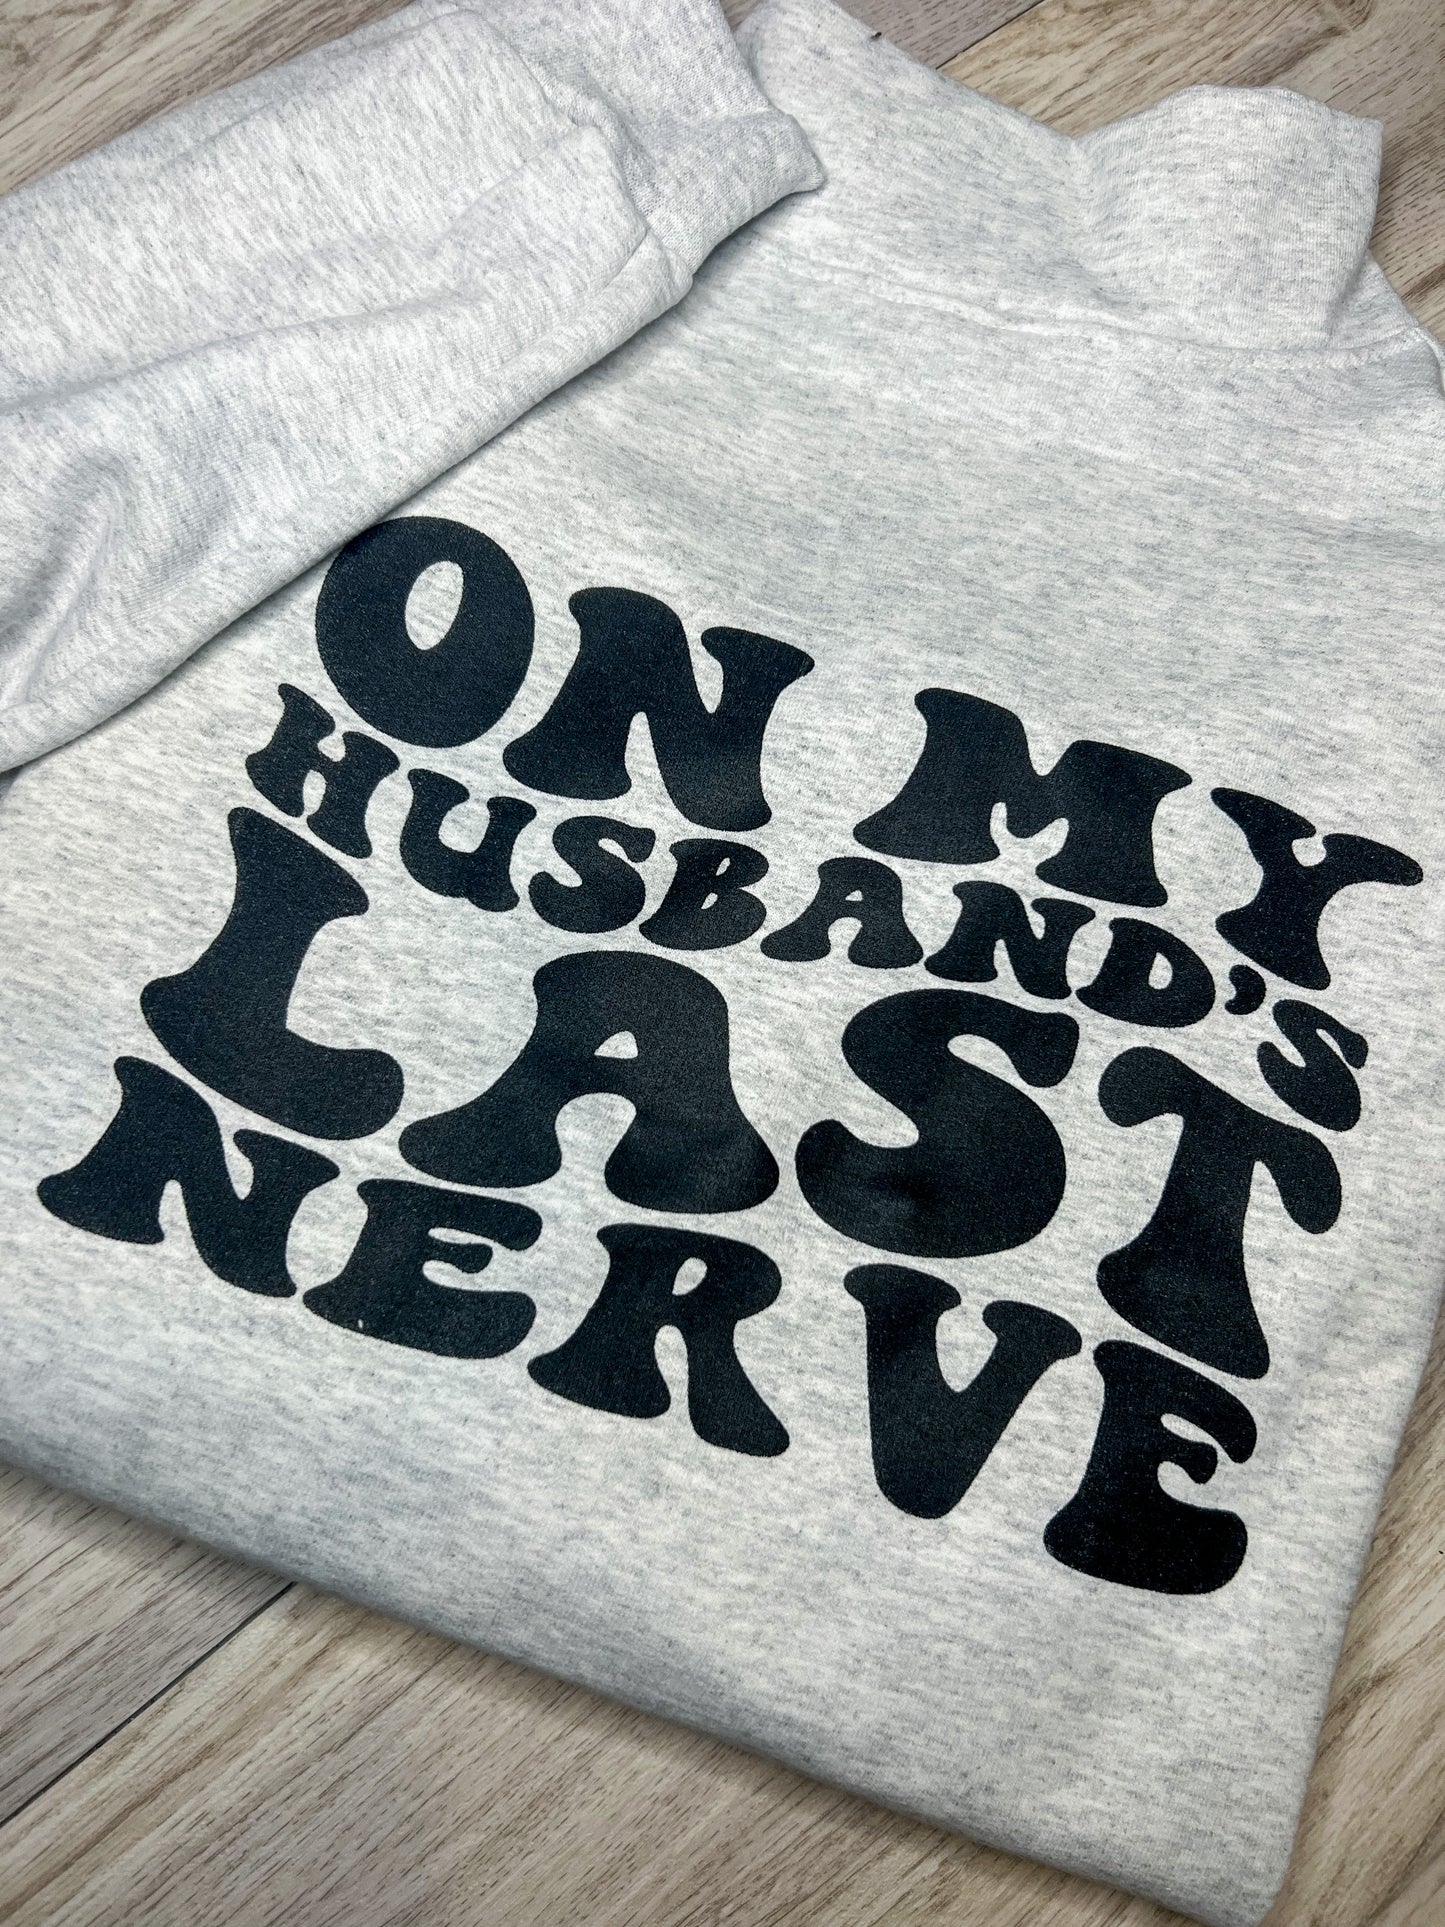 On My Husbands Last Nerve